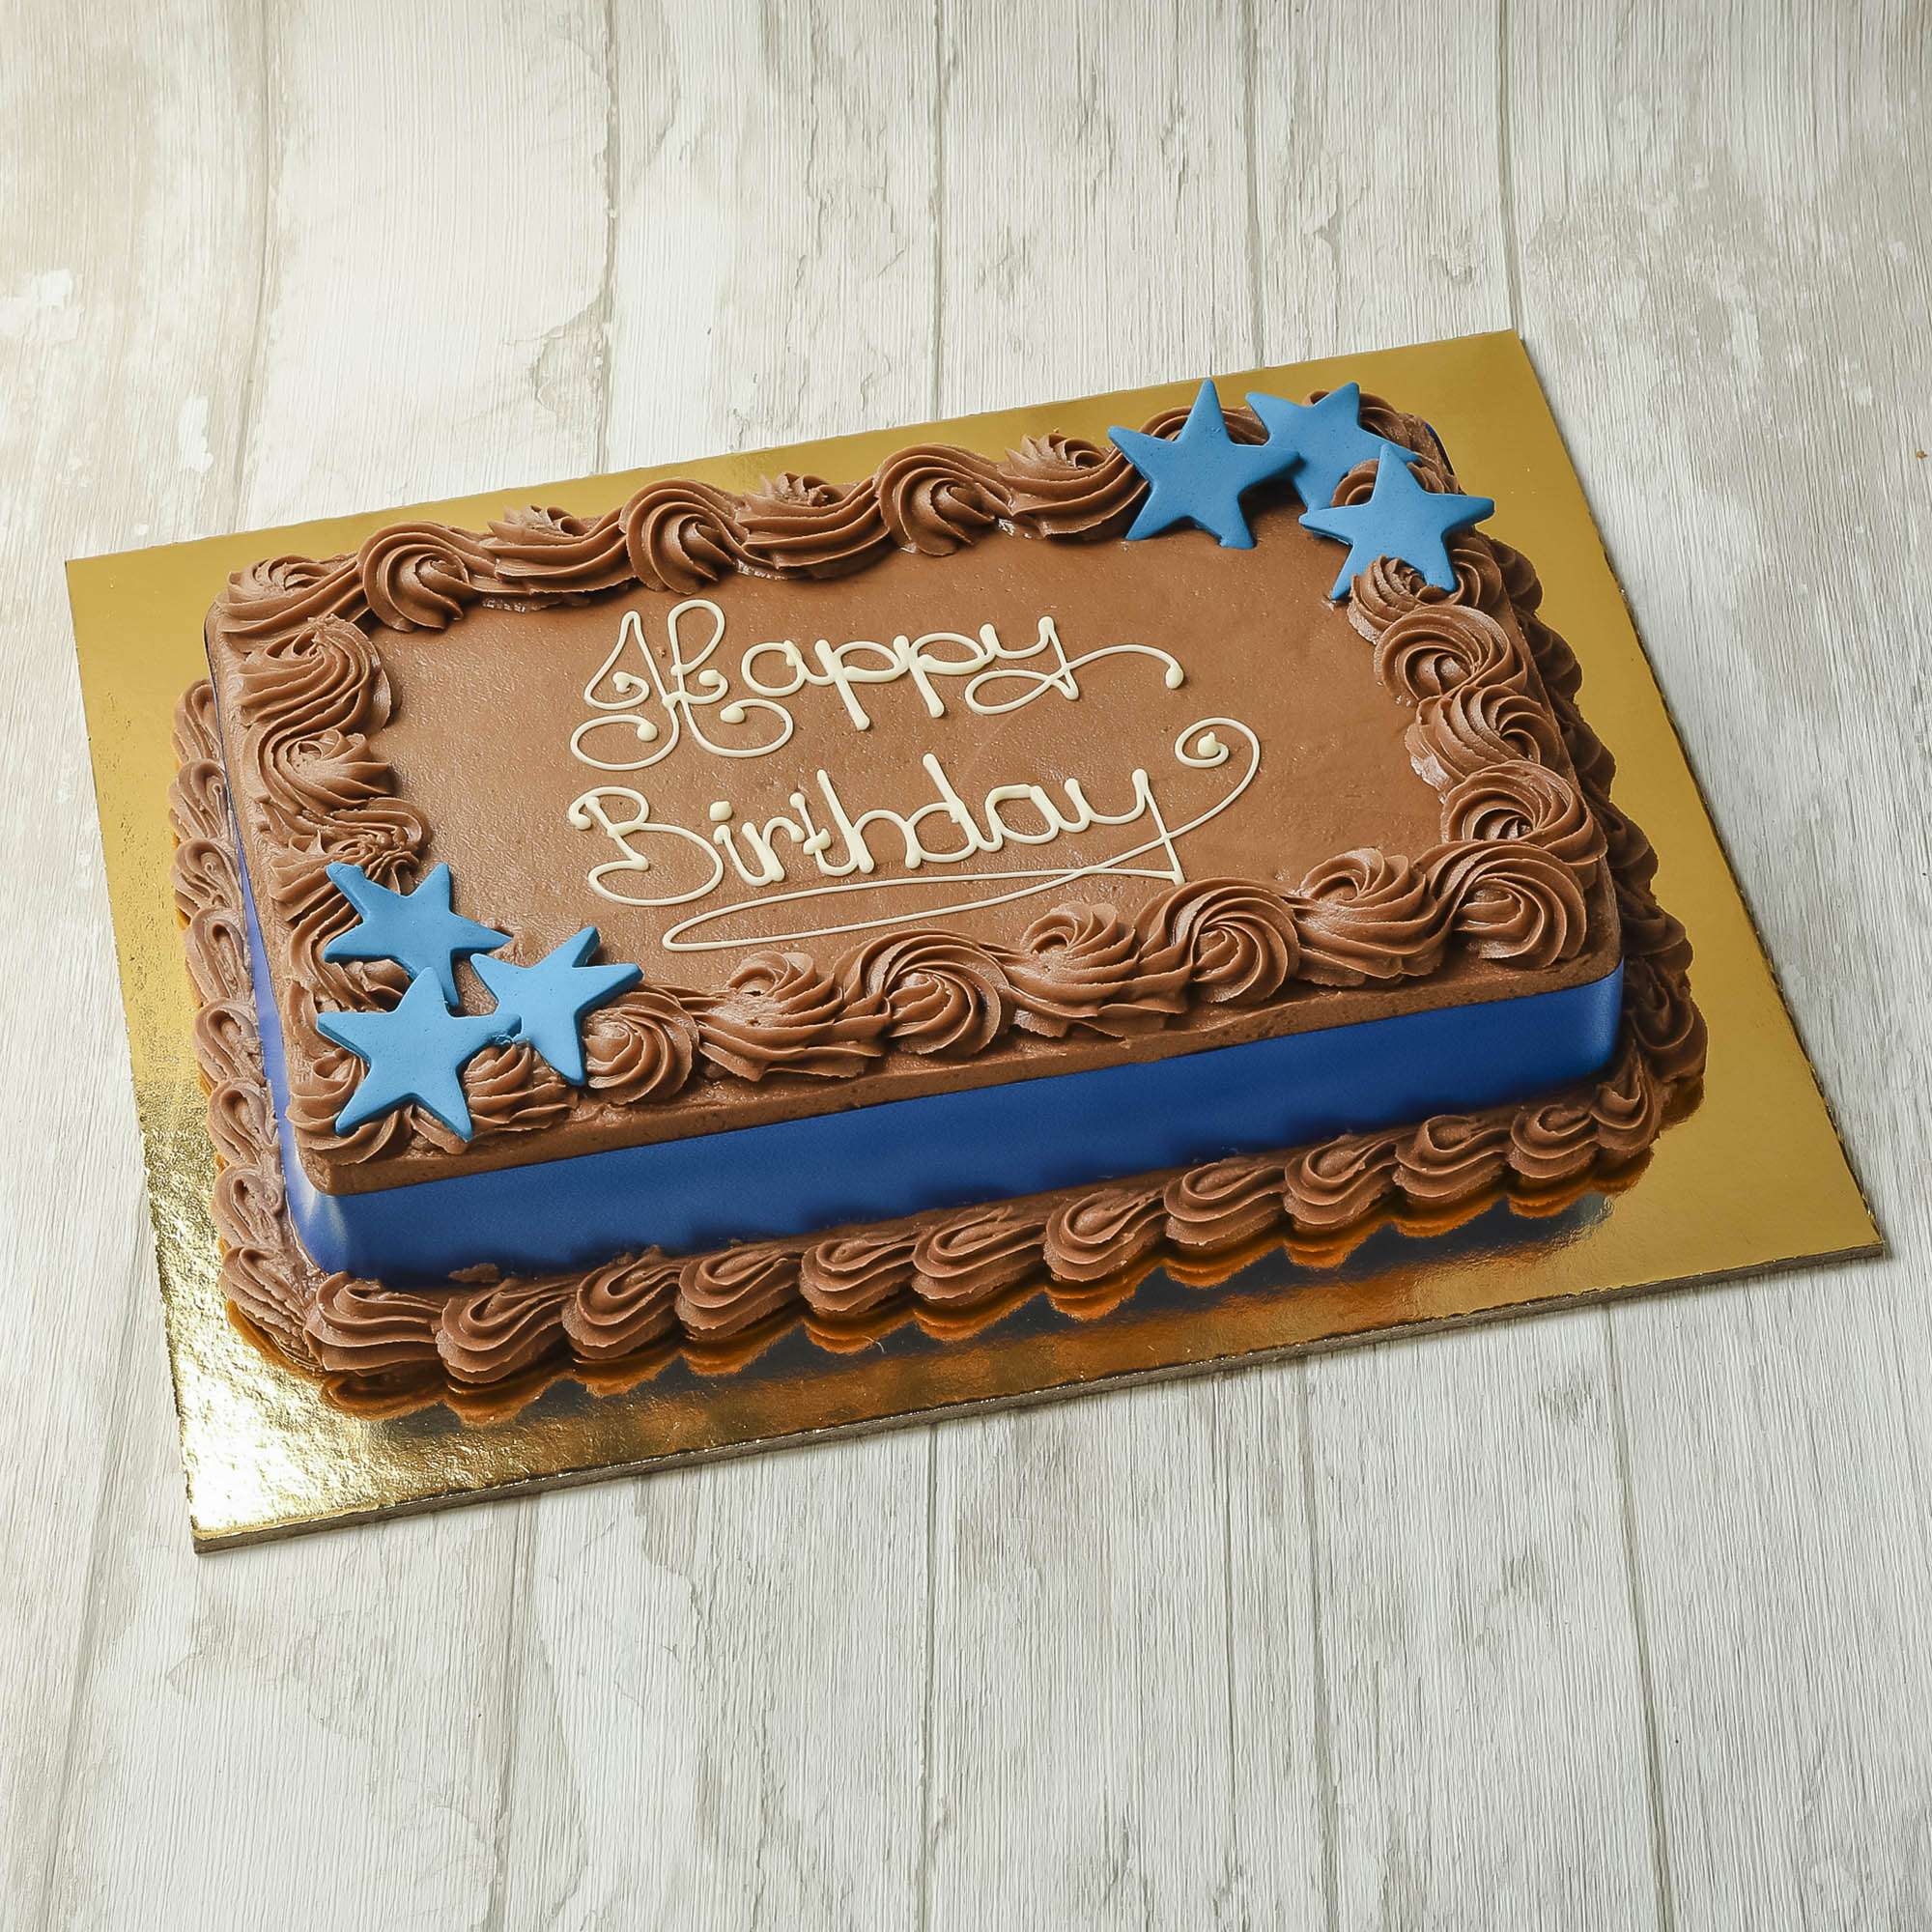 Share 143+ hangout online cake order best - in.eteachers